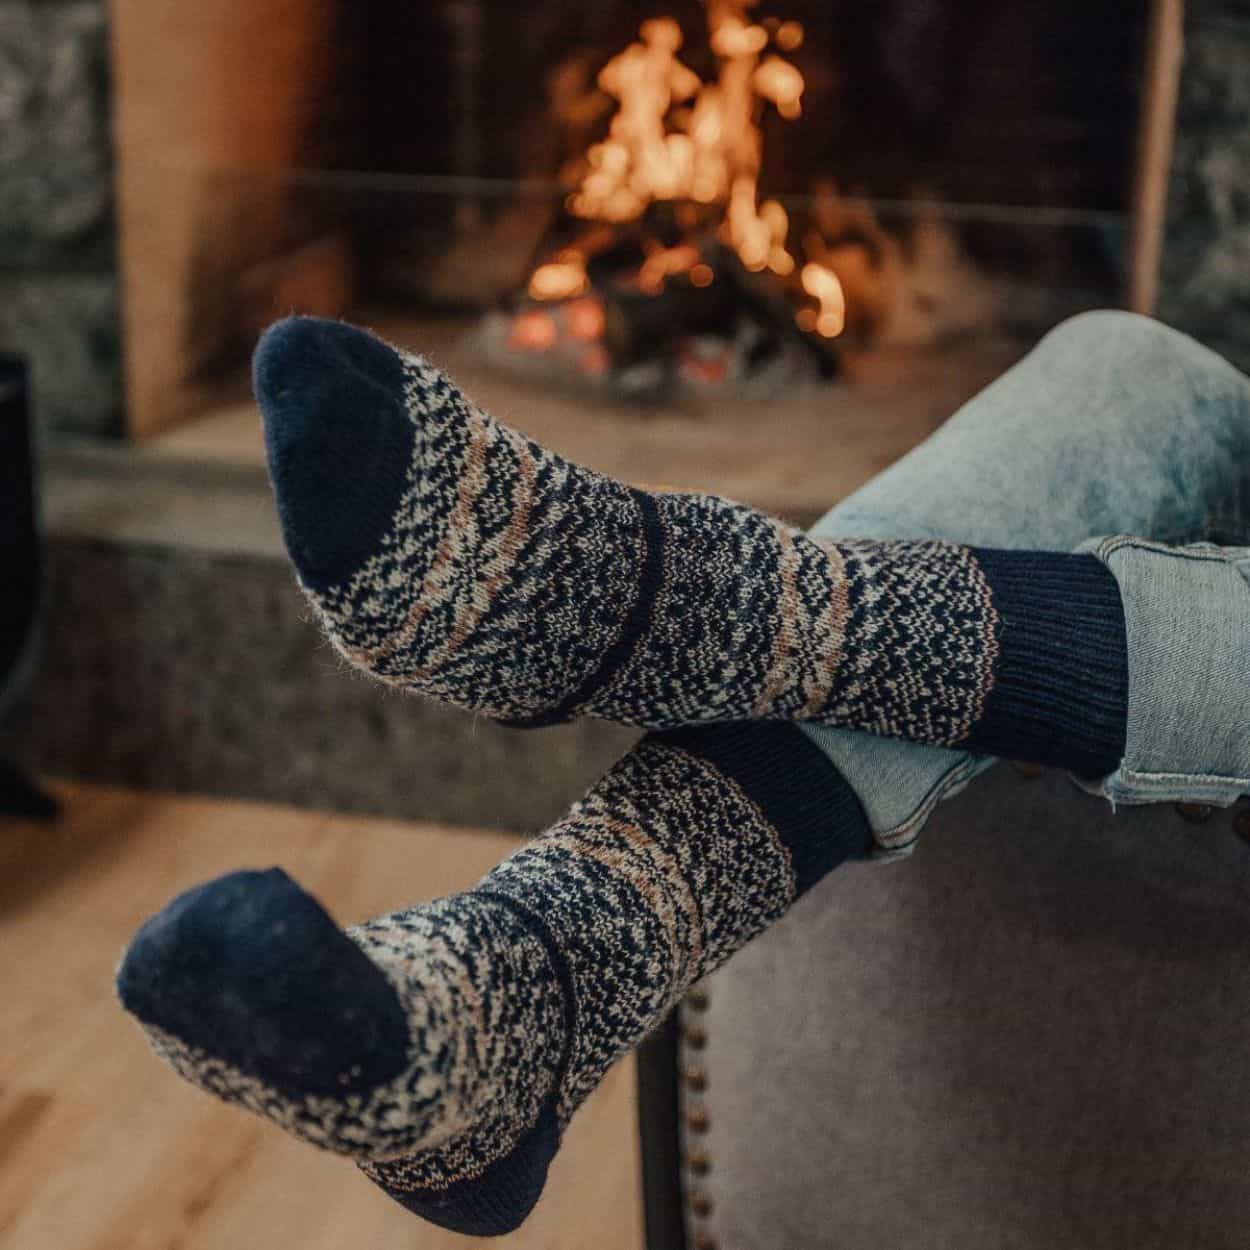 Nordic Socks Merino Wool 5 Pairs PERFORM™ Warm (Sigrid) - Unisex - Nordic  Wools